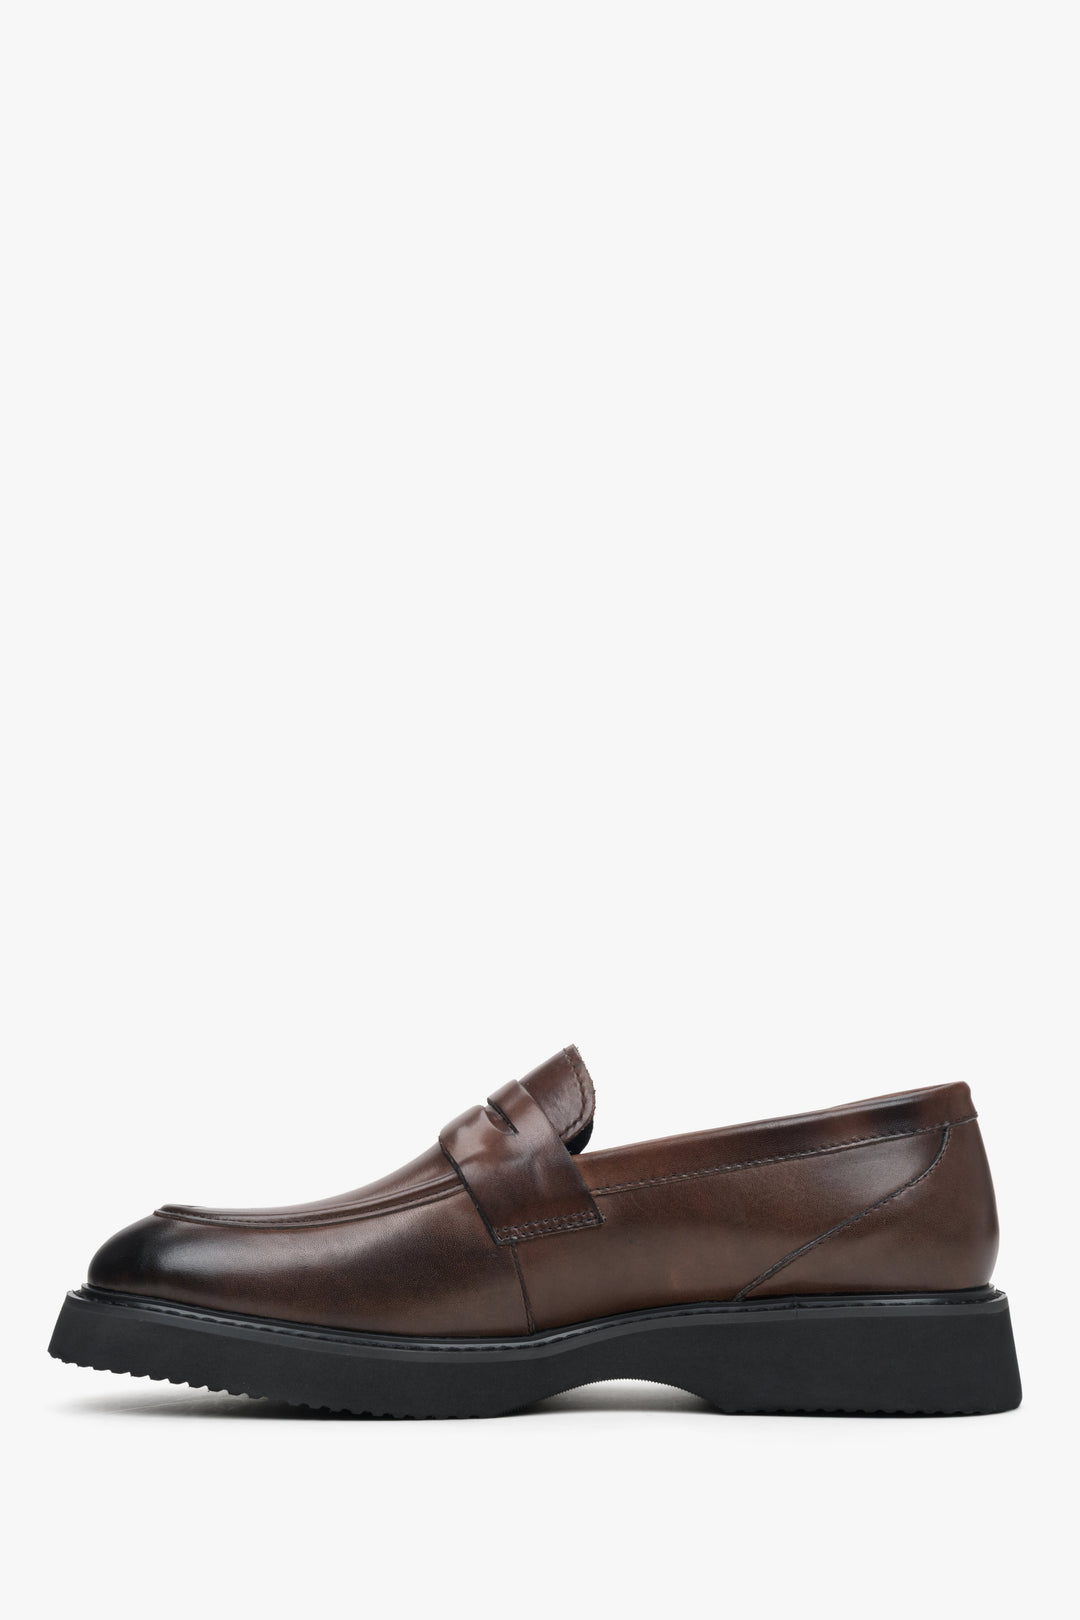 Men's dark brown Estro loafers - shoe profile.